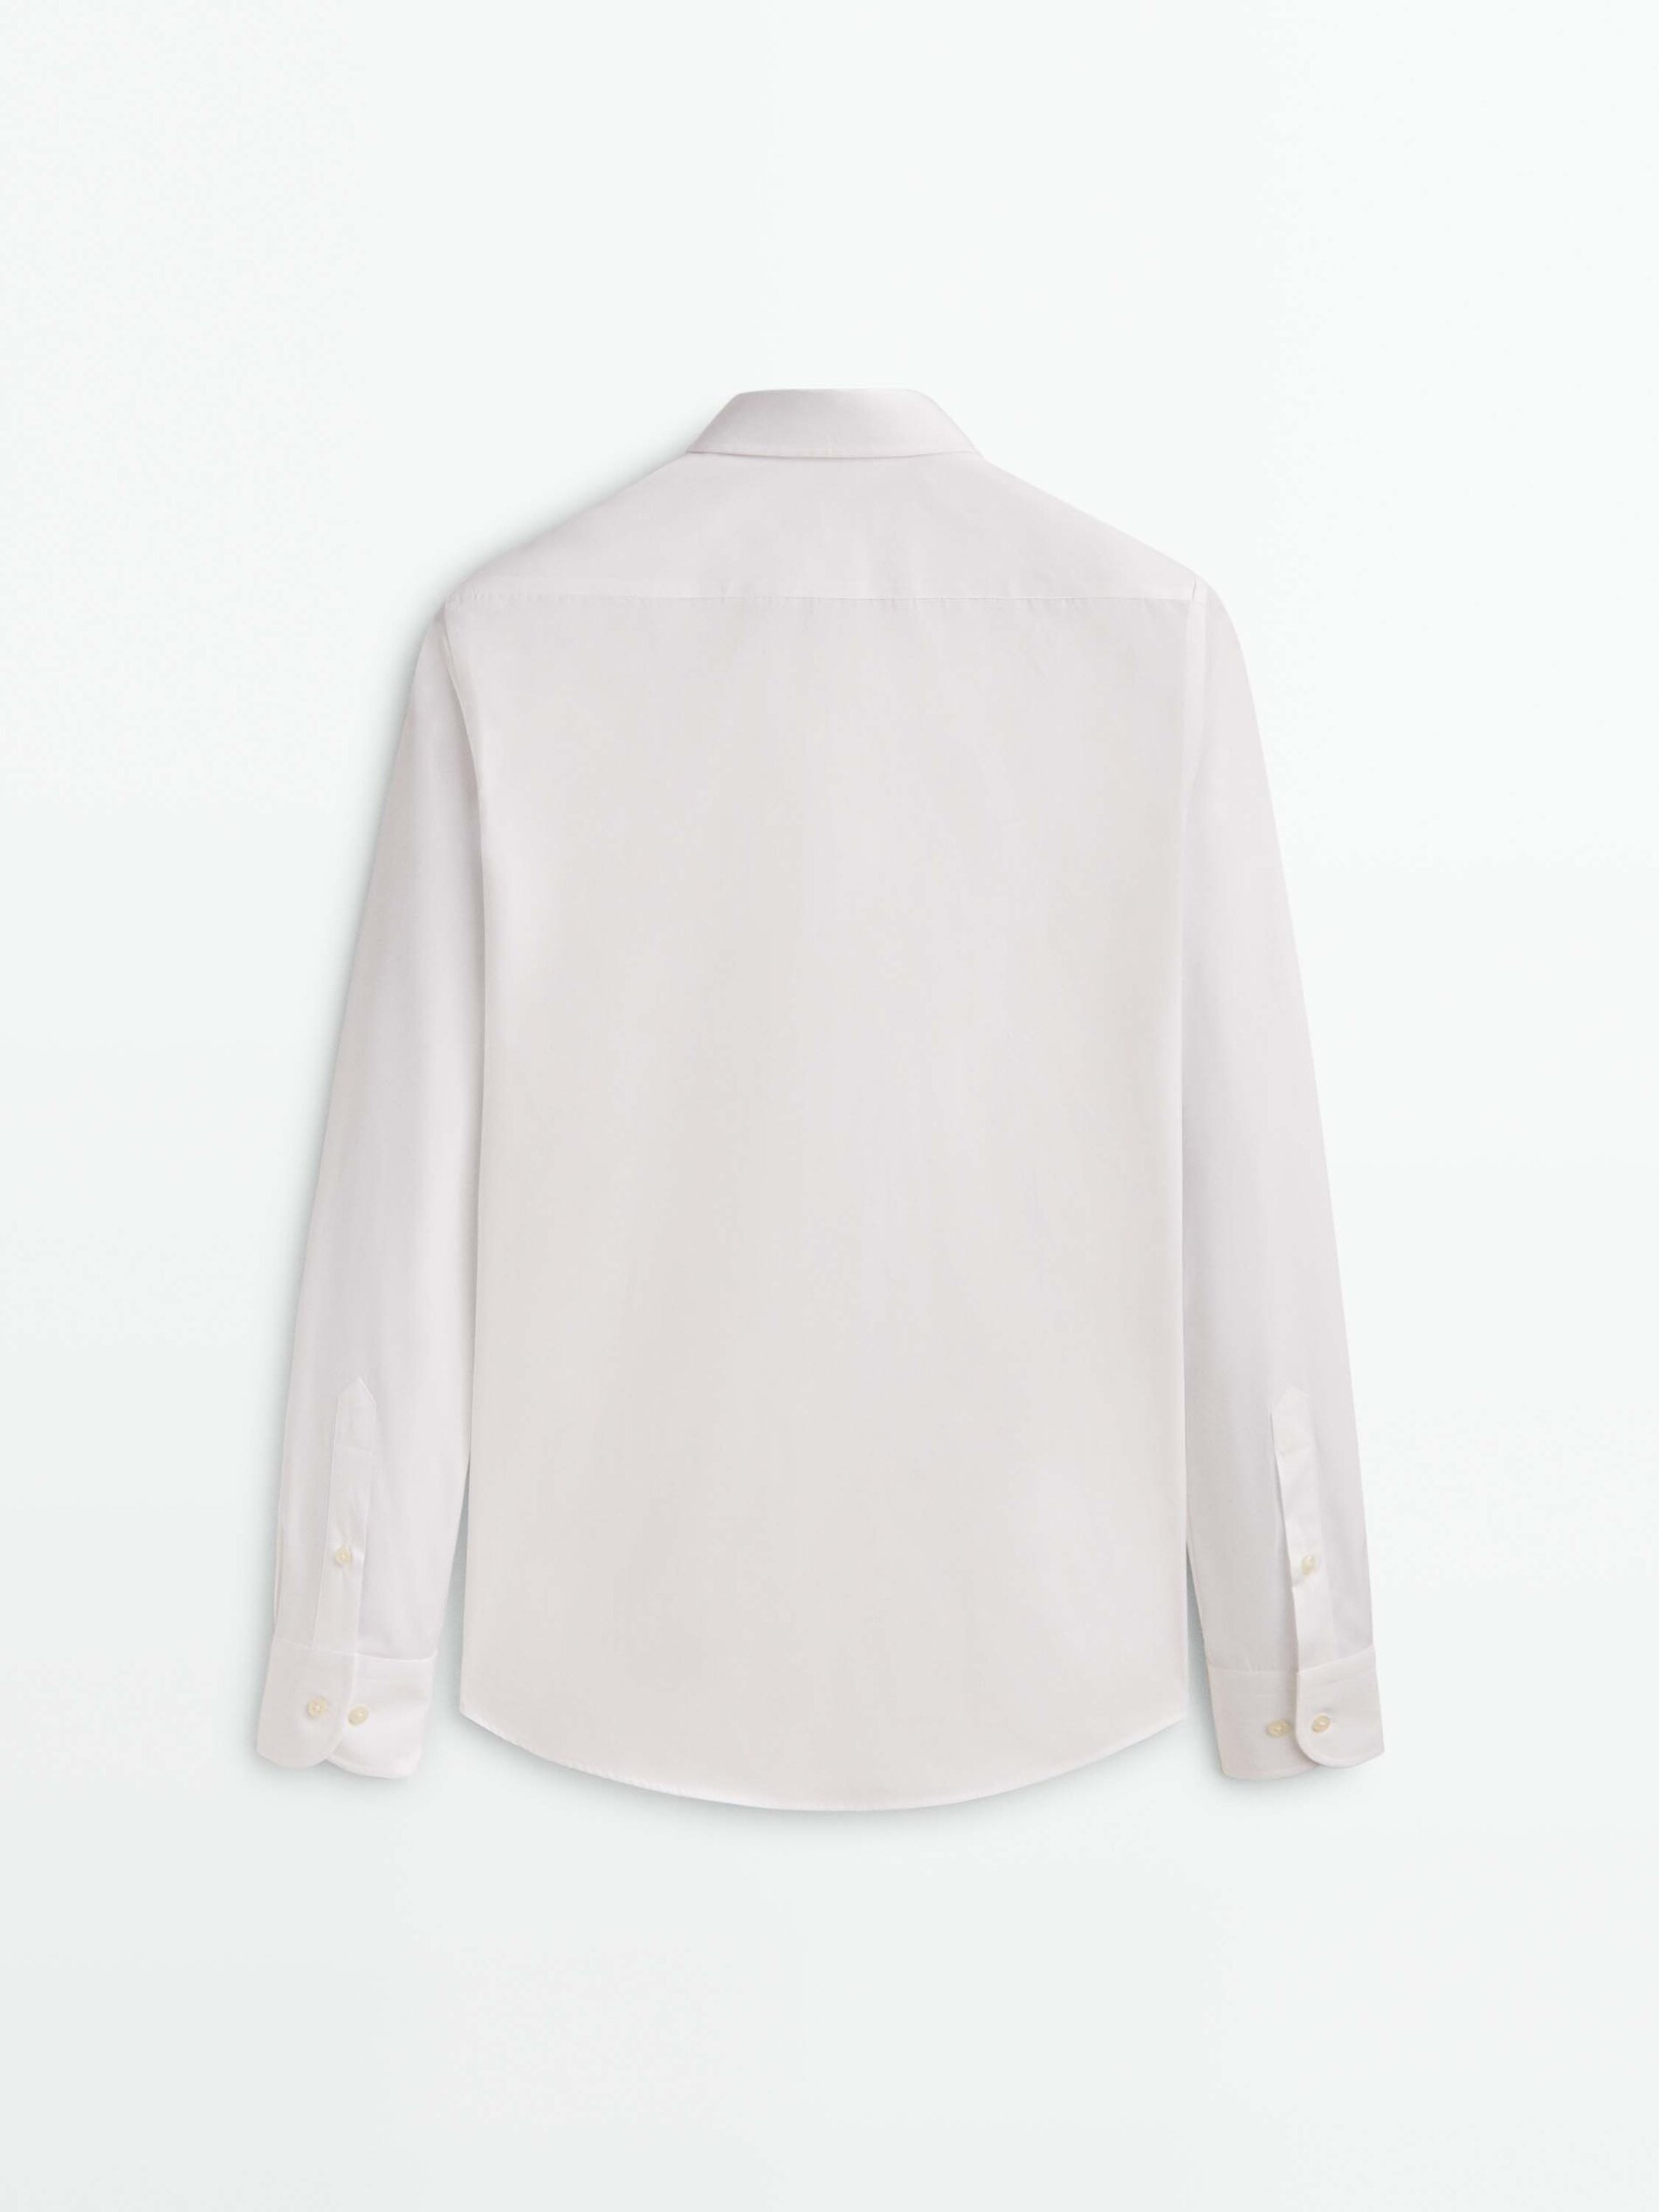 Hombre Massimo Dutti Camisa Estructura 100% Algodón Regular Fit Blanco